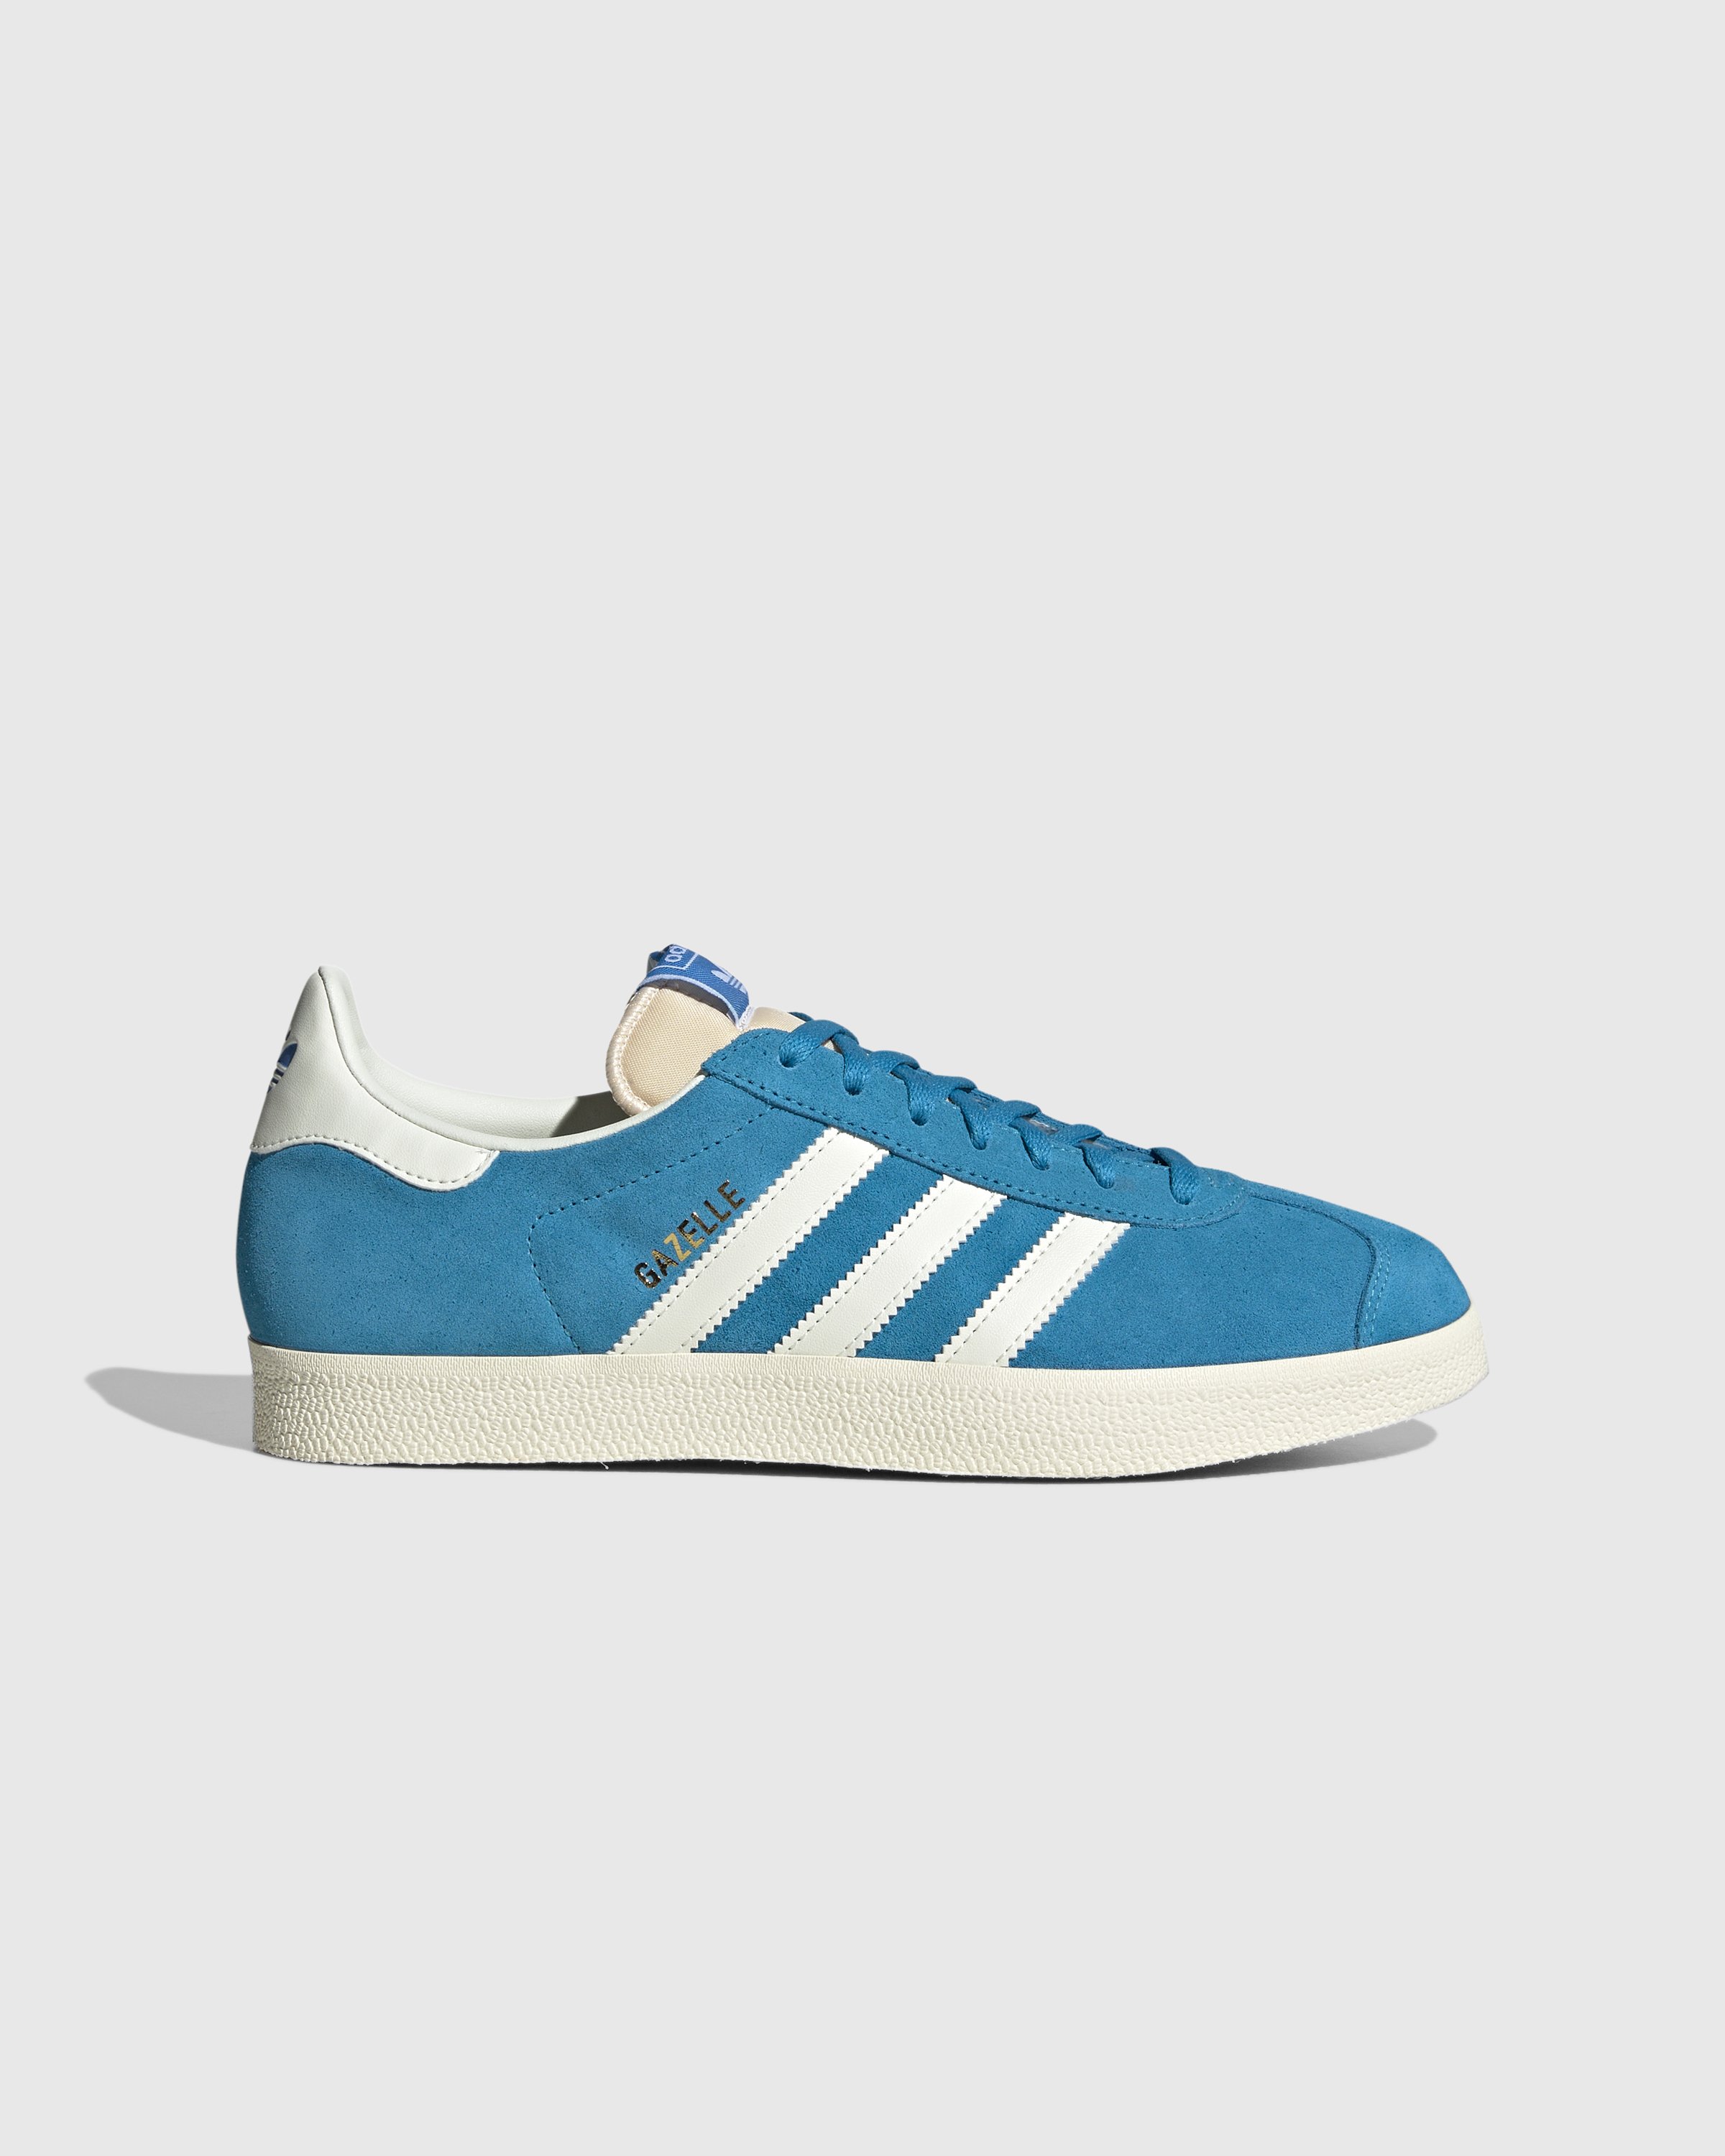 Adidas - Gazelle Aqua/White - Footwear - Blue - Image 1